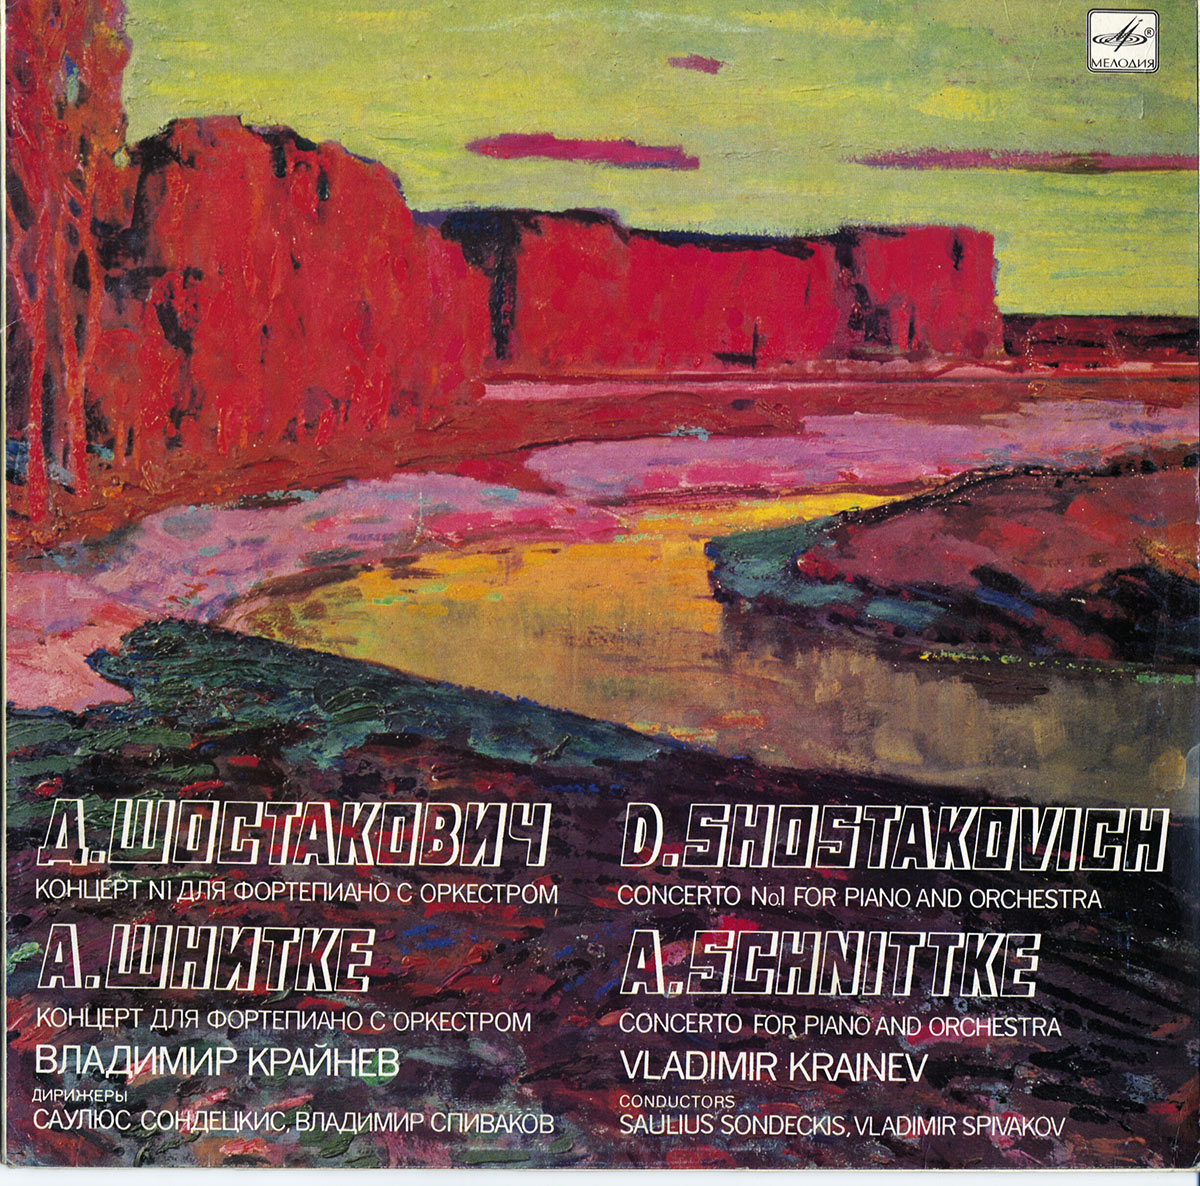 Д. ШОСТАКОВИЧ (1906-1975), А. ШНИТКЕ (1934-1998): Концерты для ф-но с оркестром